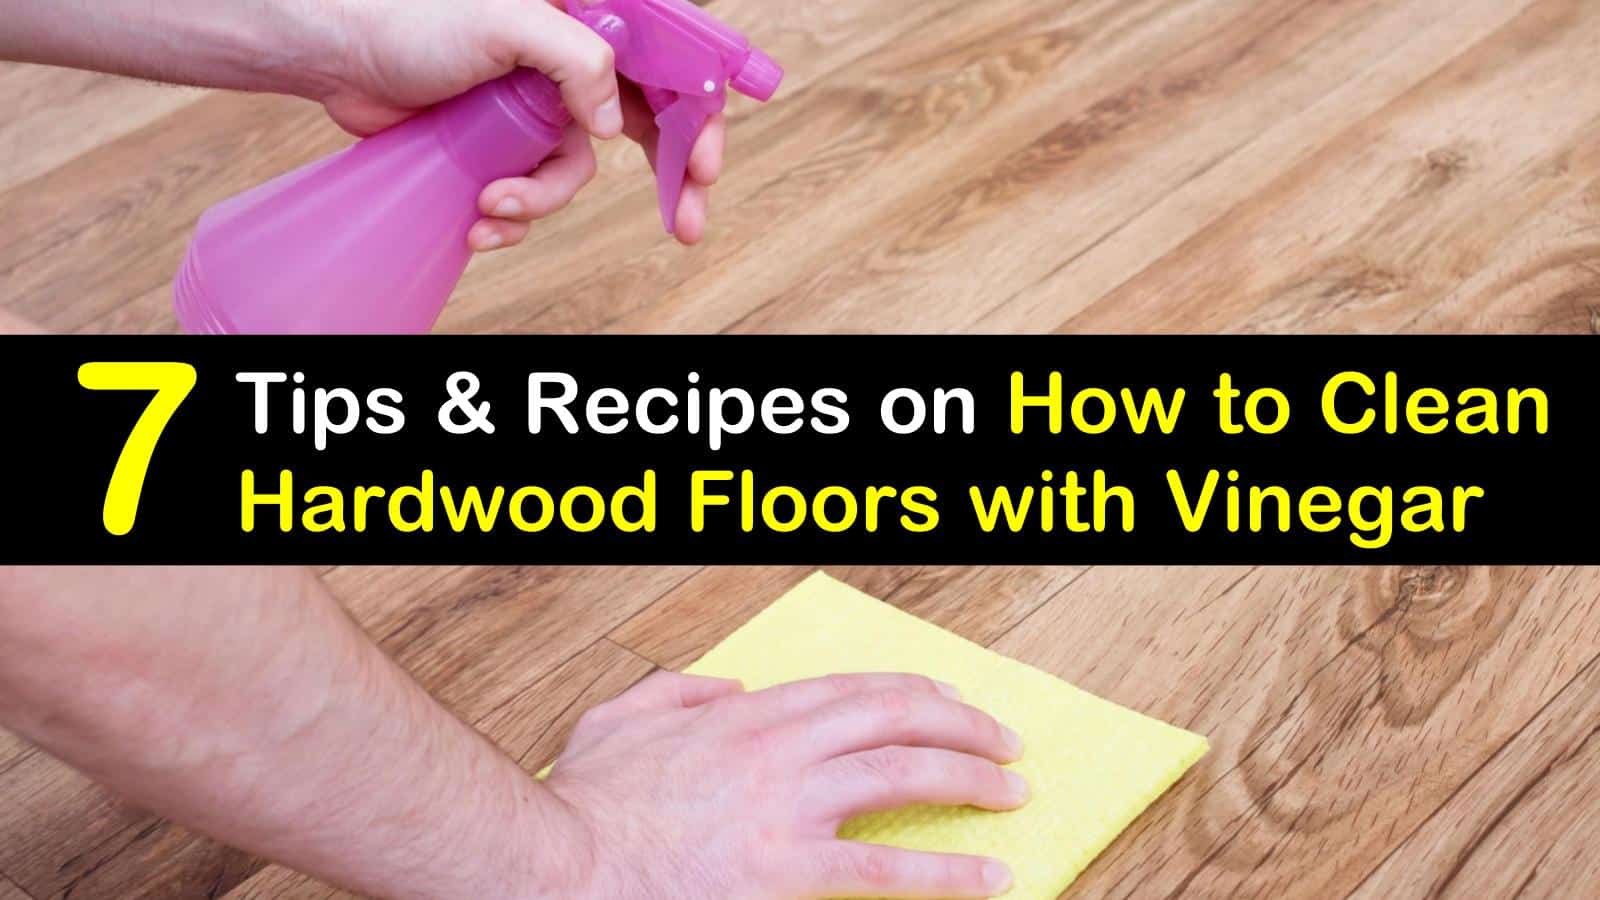 Clean Hardwood Floors With Vinegar, How To Properly Clean Hardwood Floors